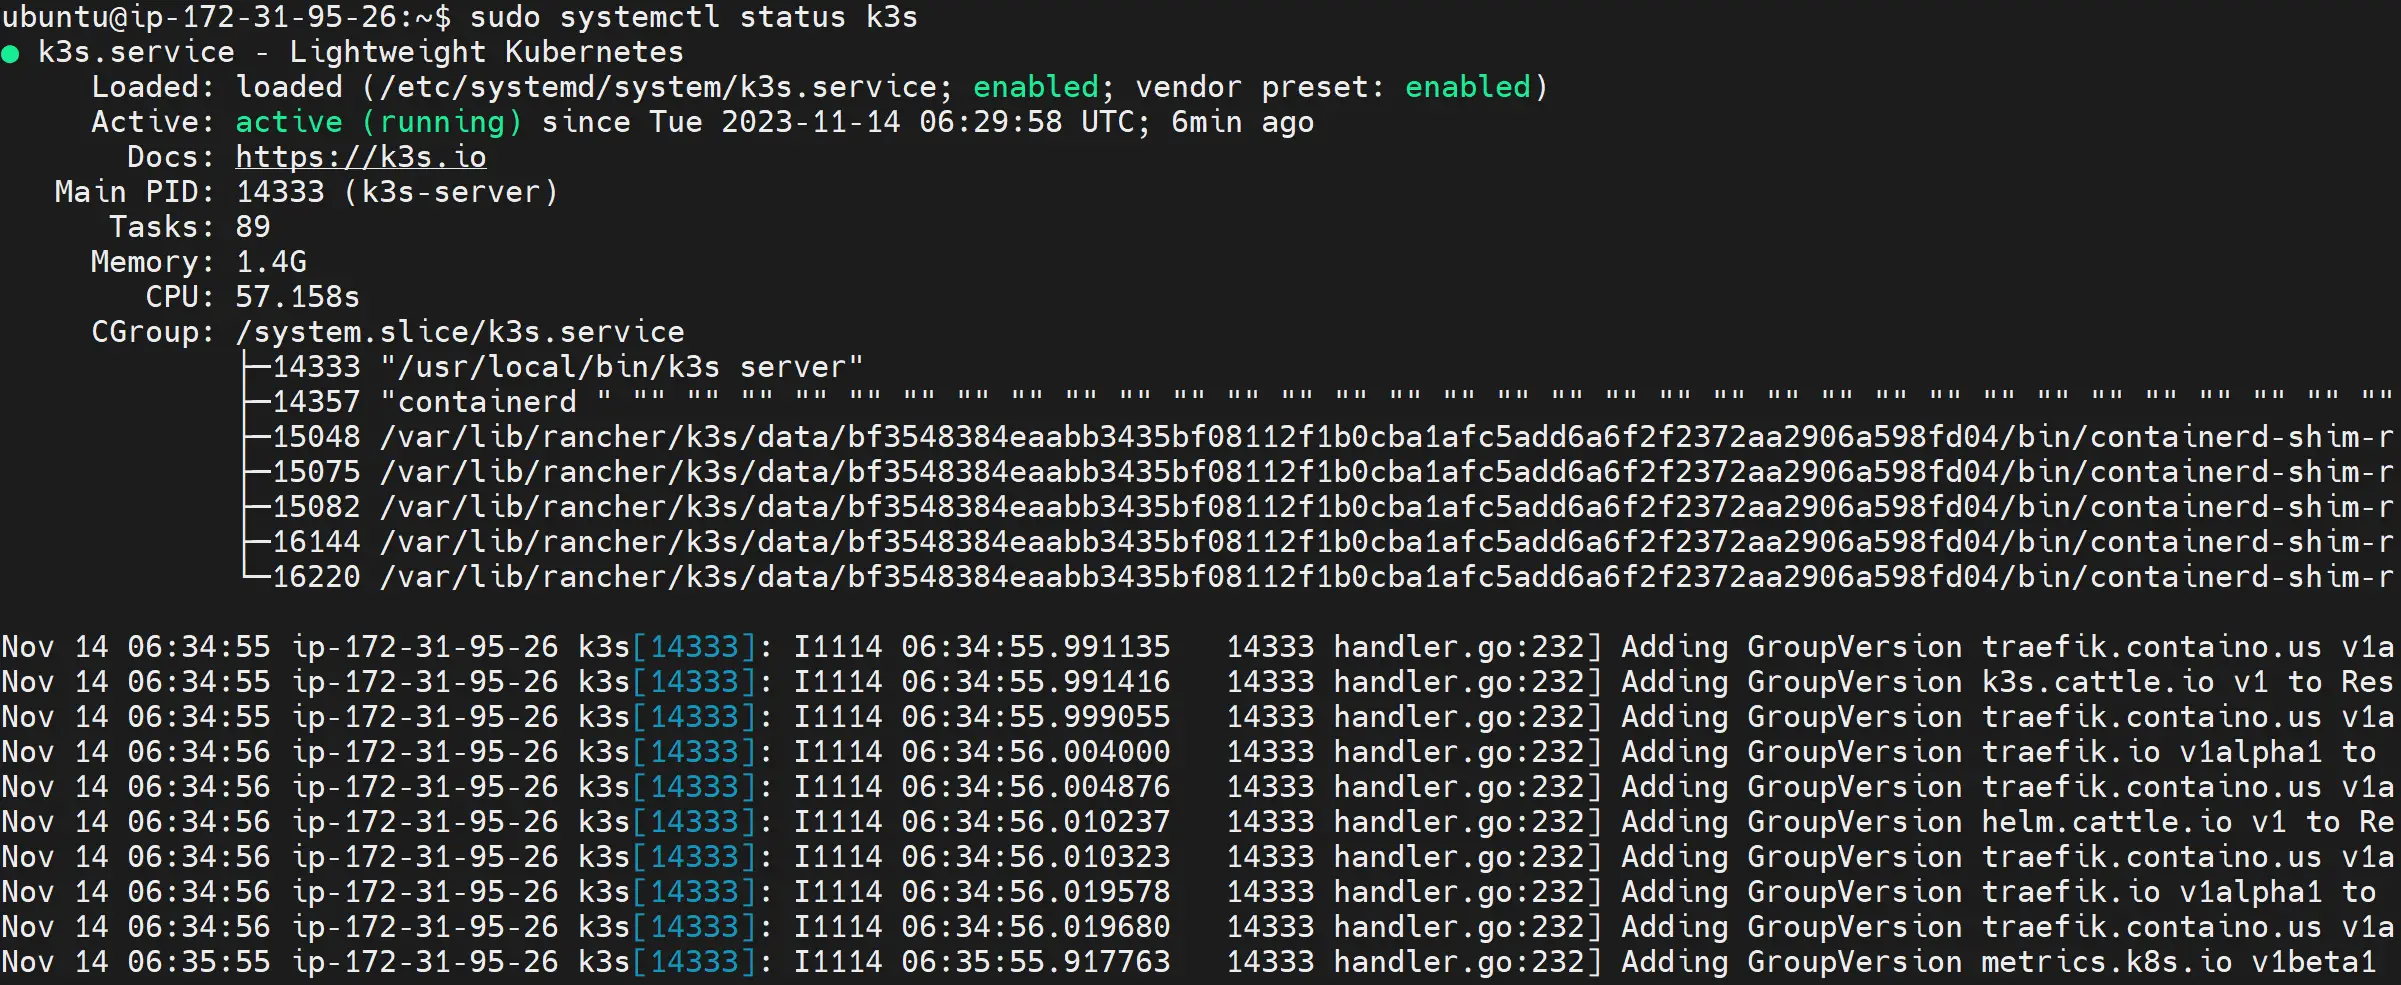 Install Single Node K3s on Ubuntu 20.04|22.04 Step-by-Step